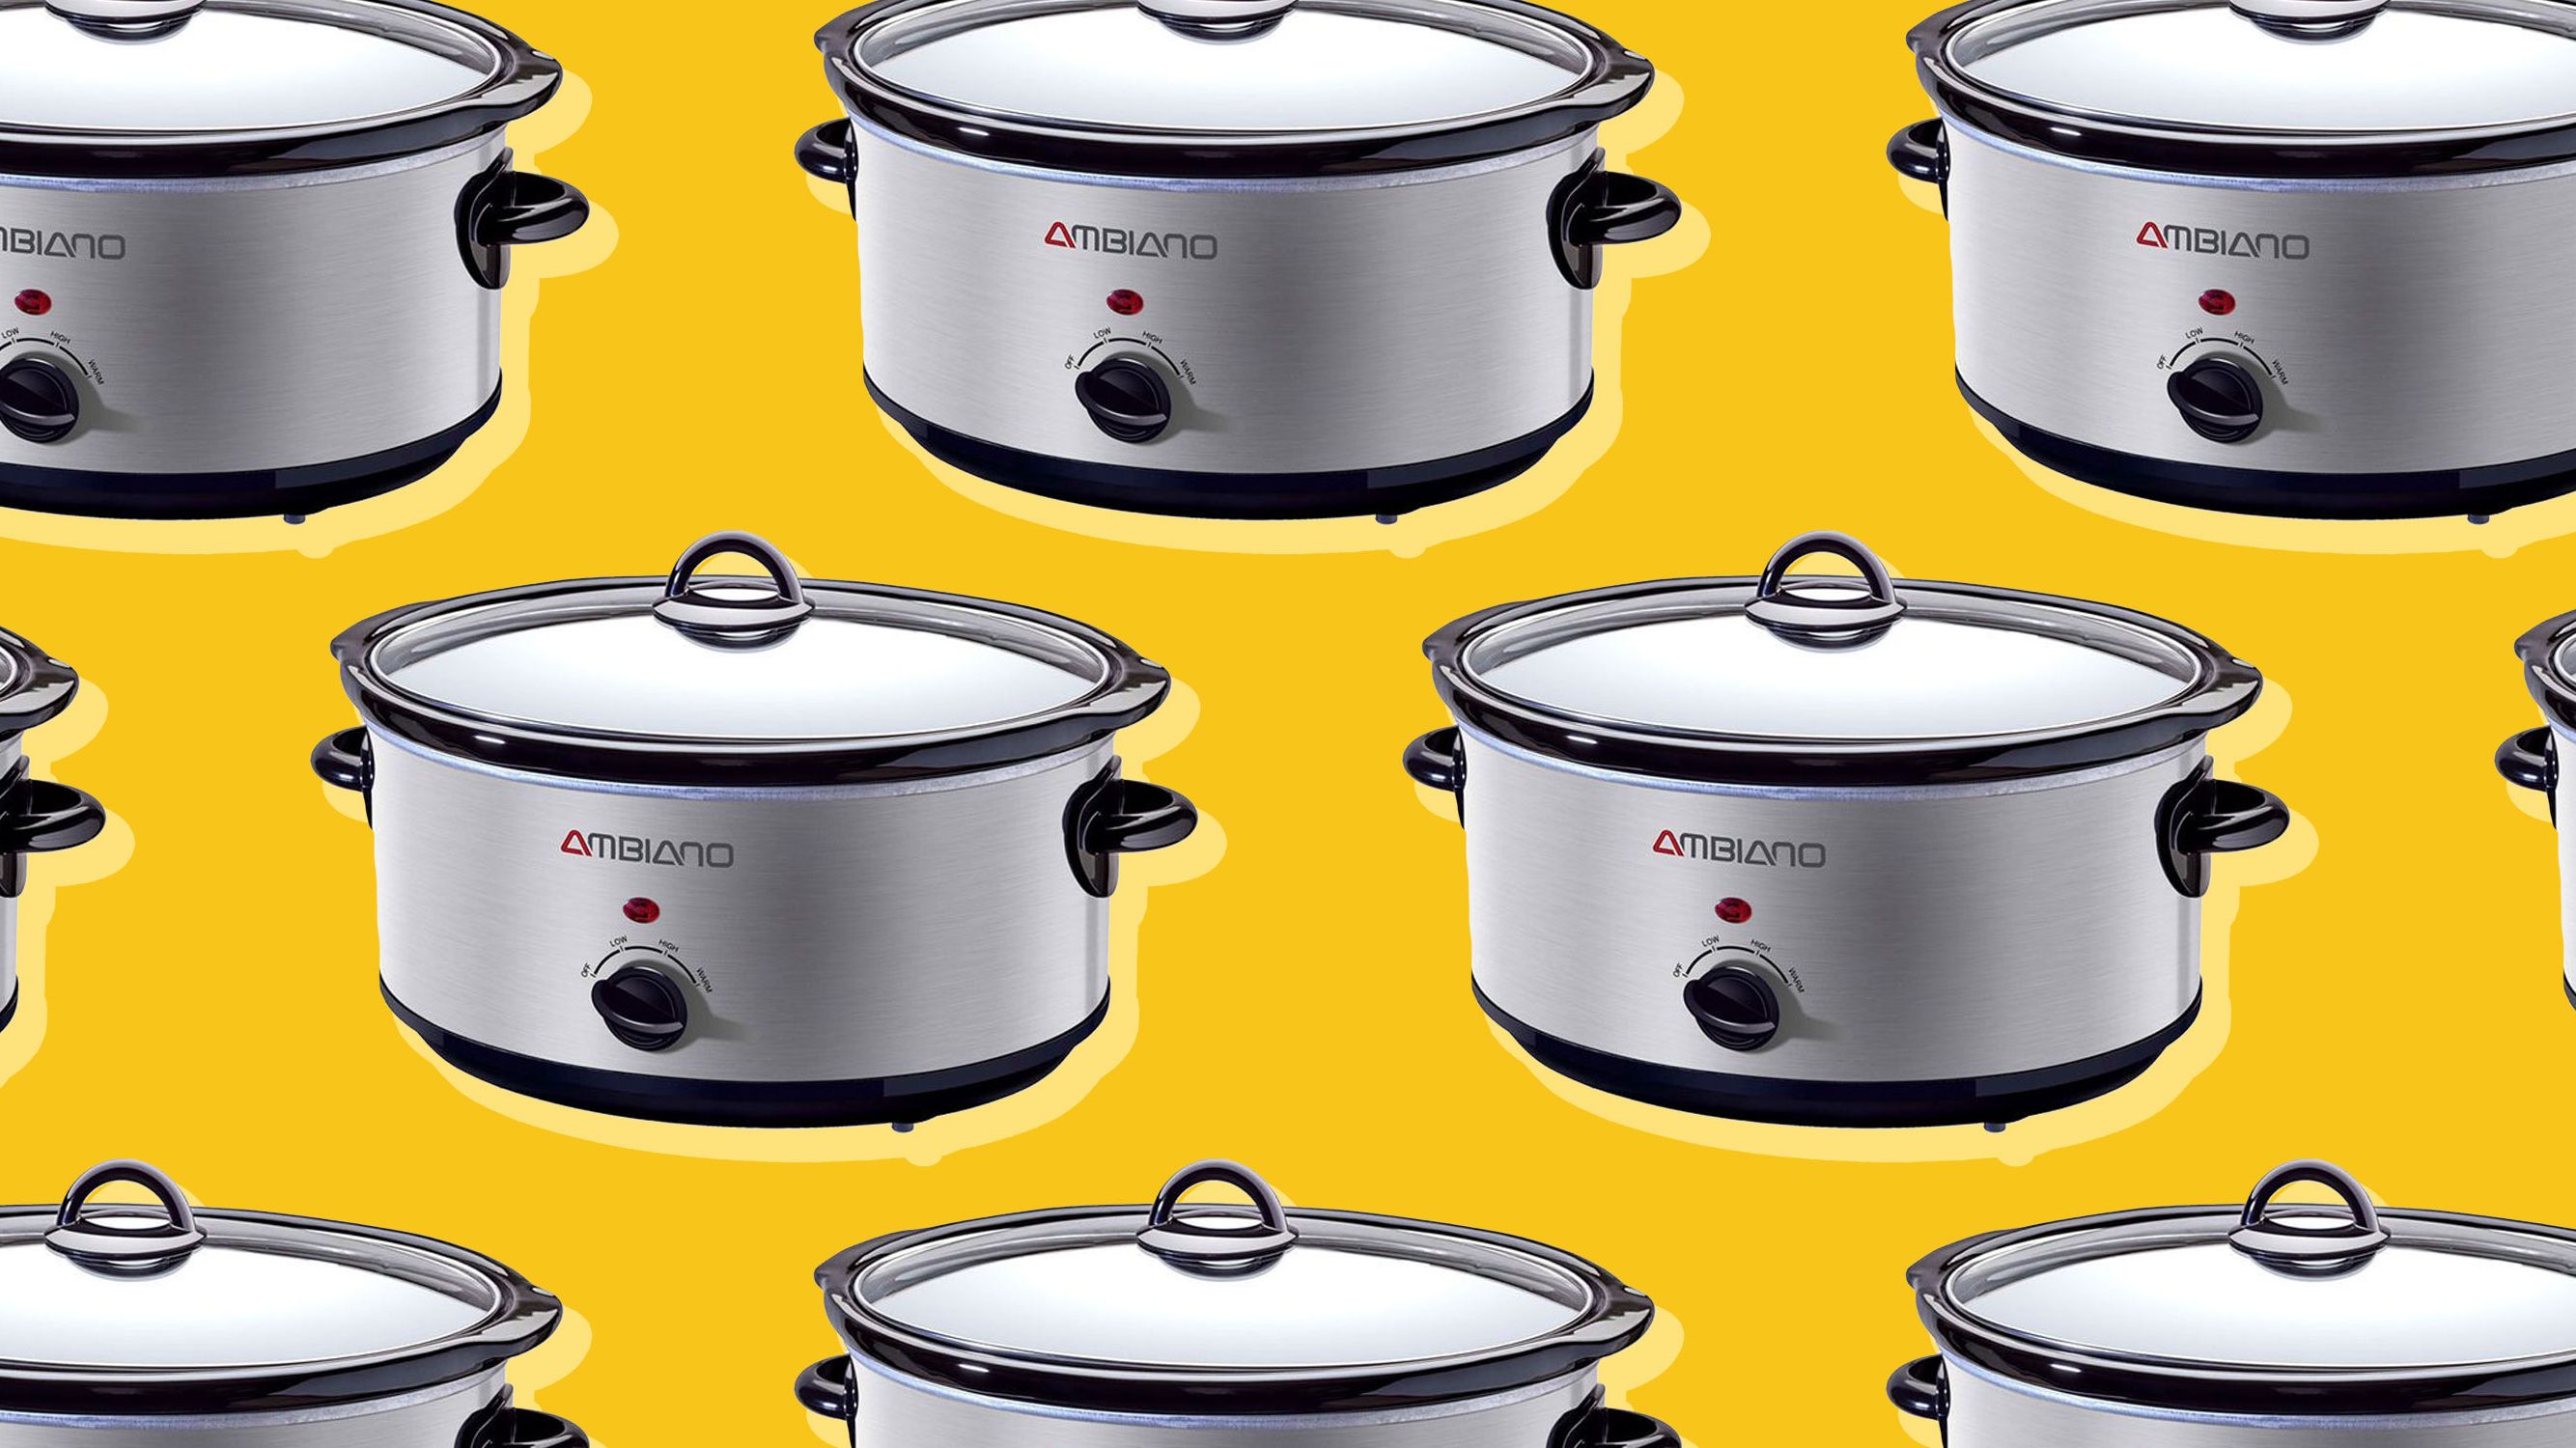  Crock-Pot Design to Shine 7 Quart Slow Cooker and Food